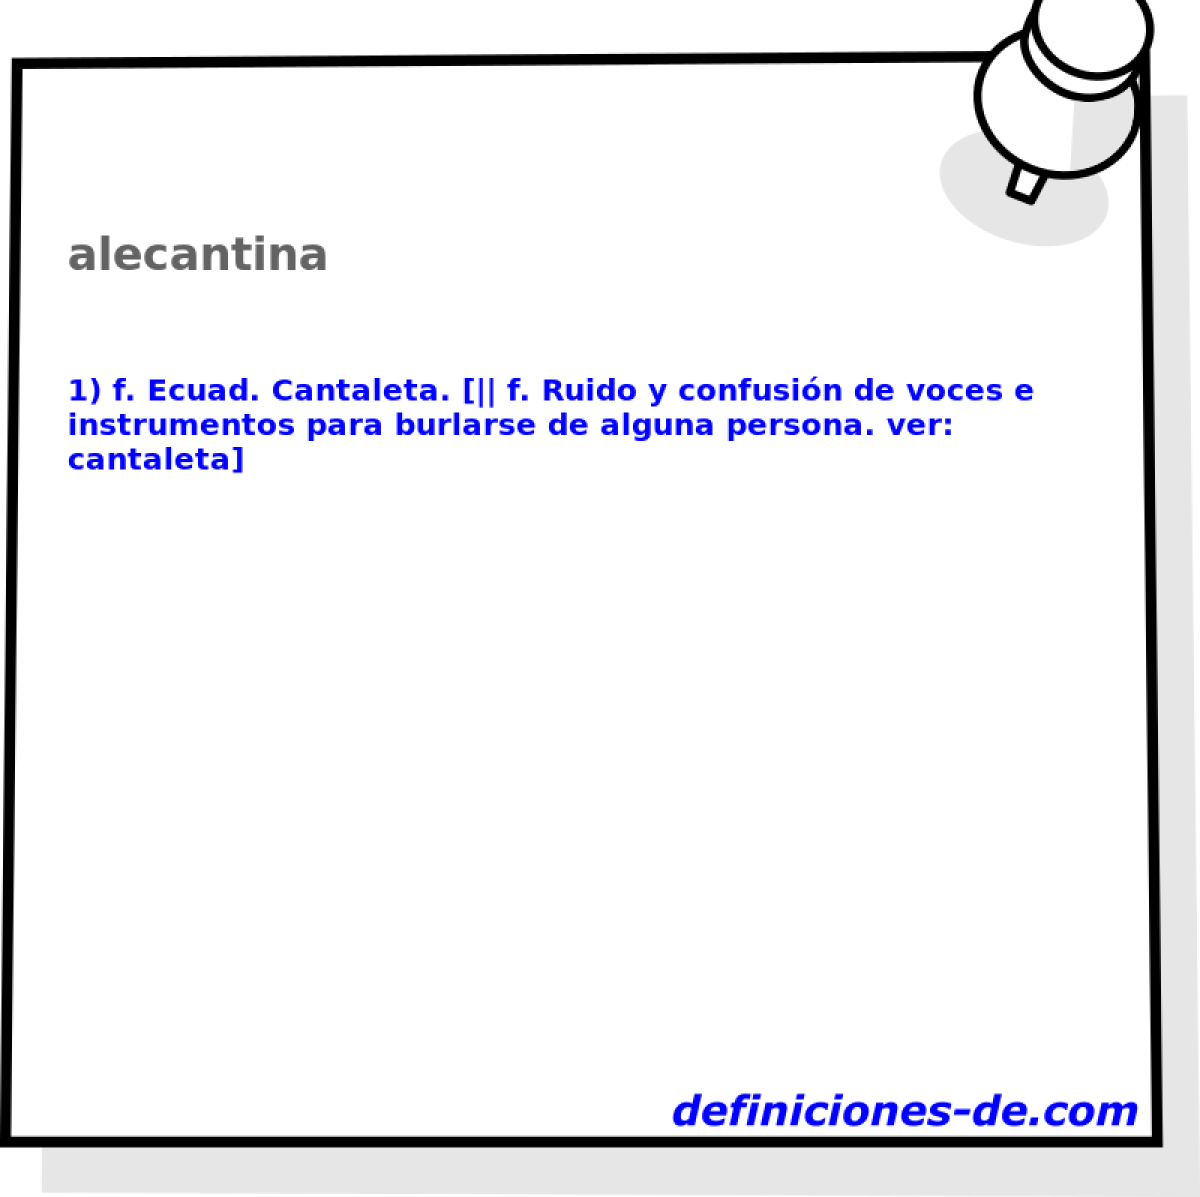 alecantina 